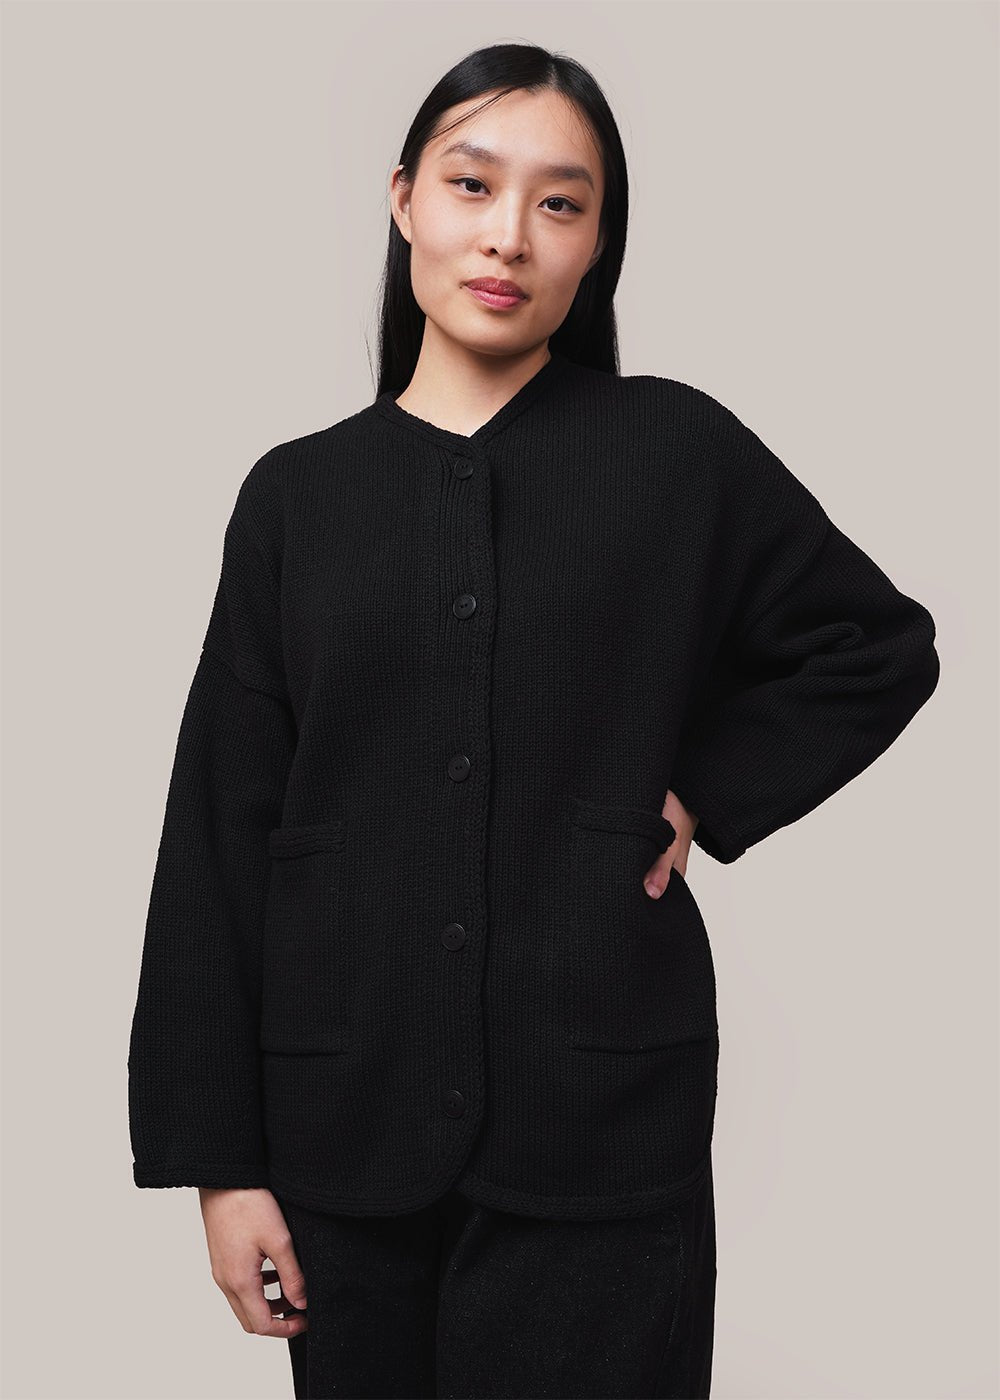 Cordera Black Cotton Jacket - New Classics Studios Sustainable Ethical Fashion Canada